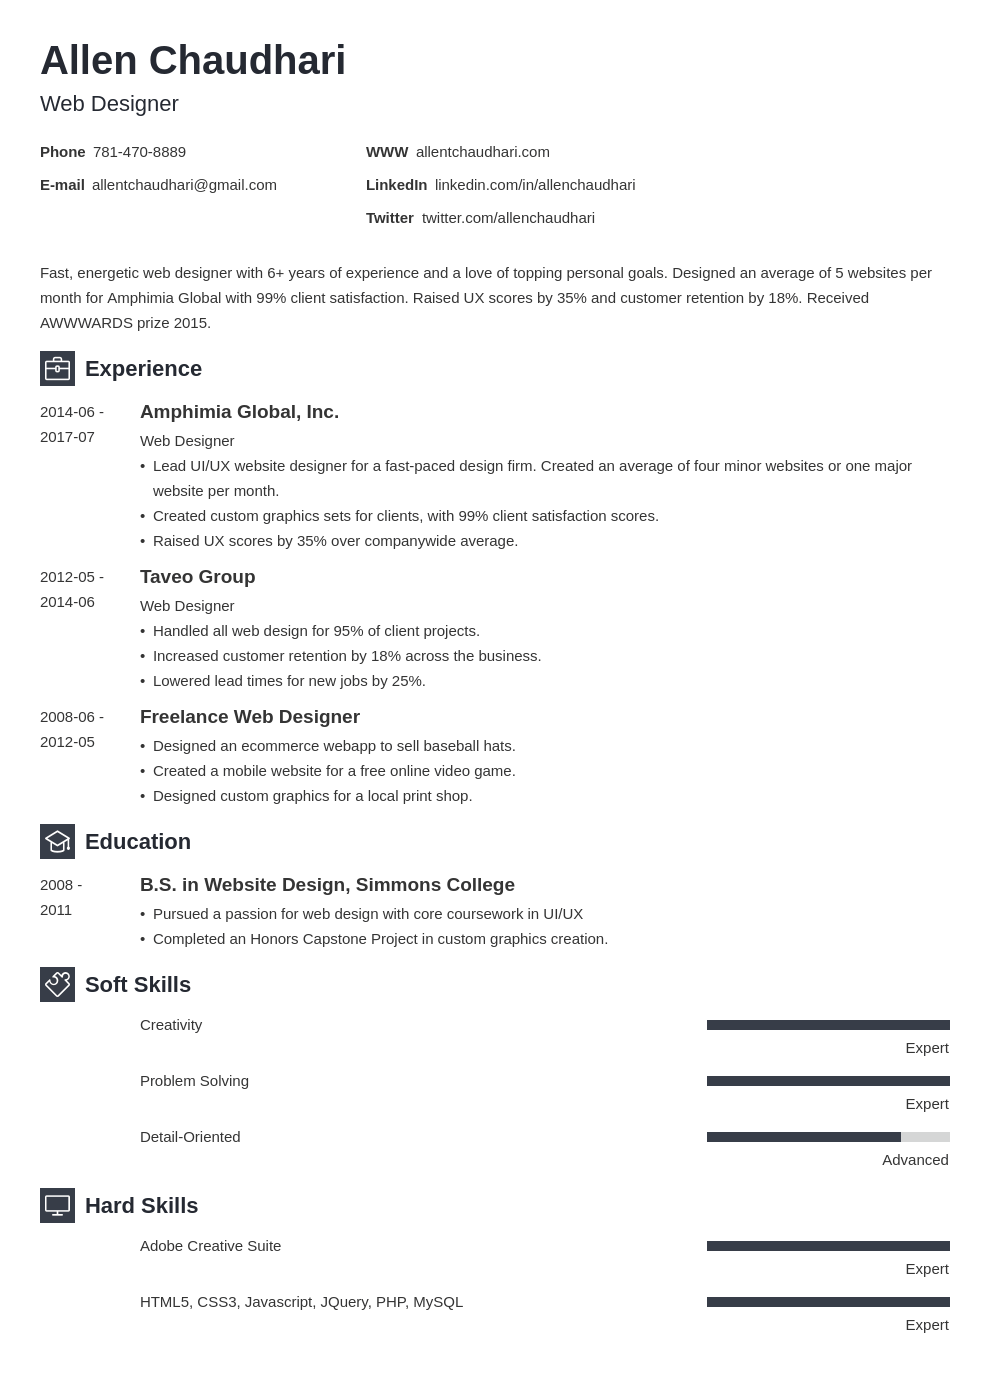 web designer resume template free download